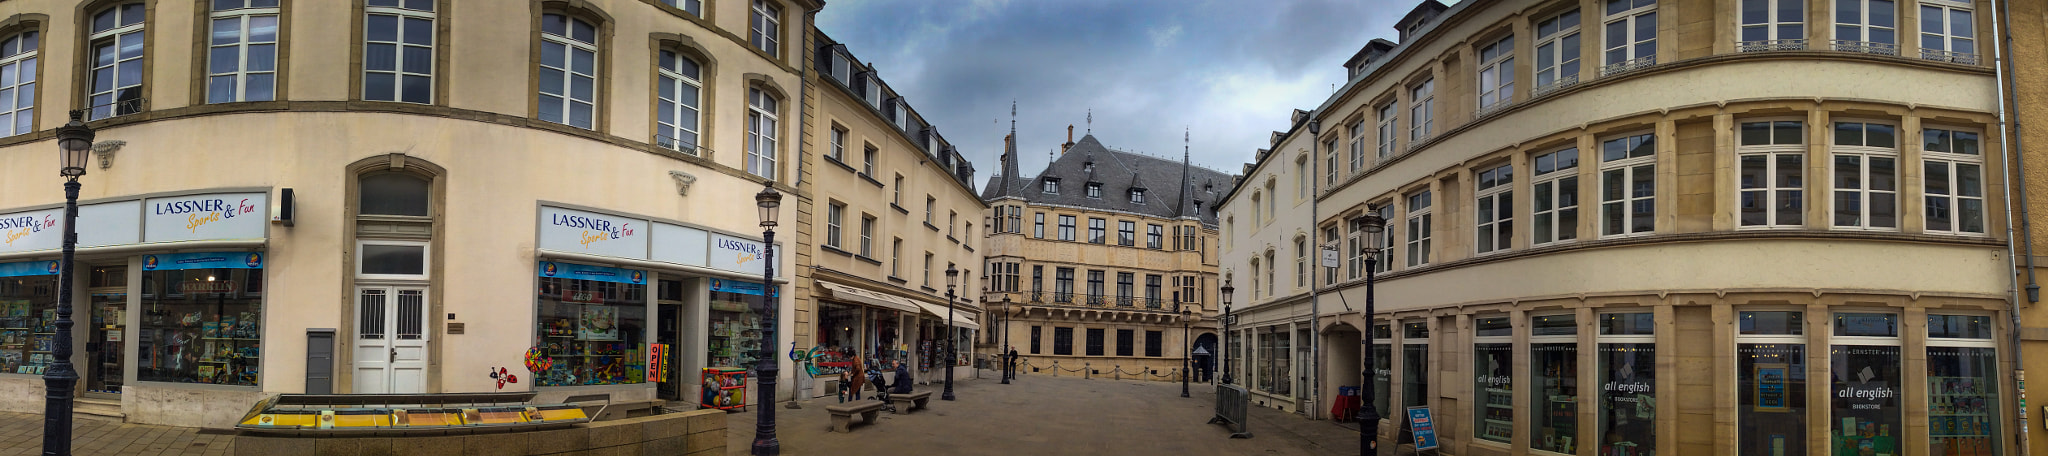 Apple iPad mini 2 sample photo. Rue de la reine, luxembourg city. photography